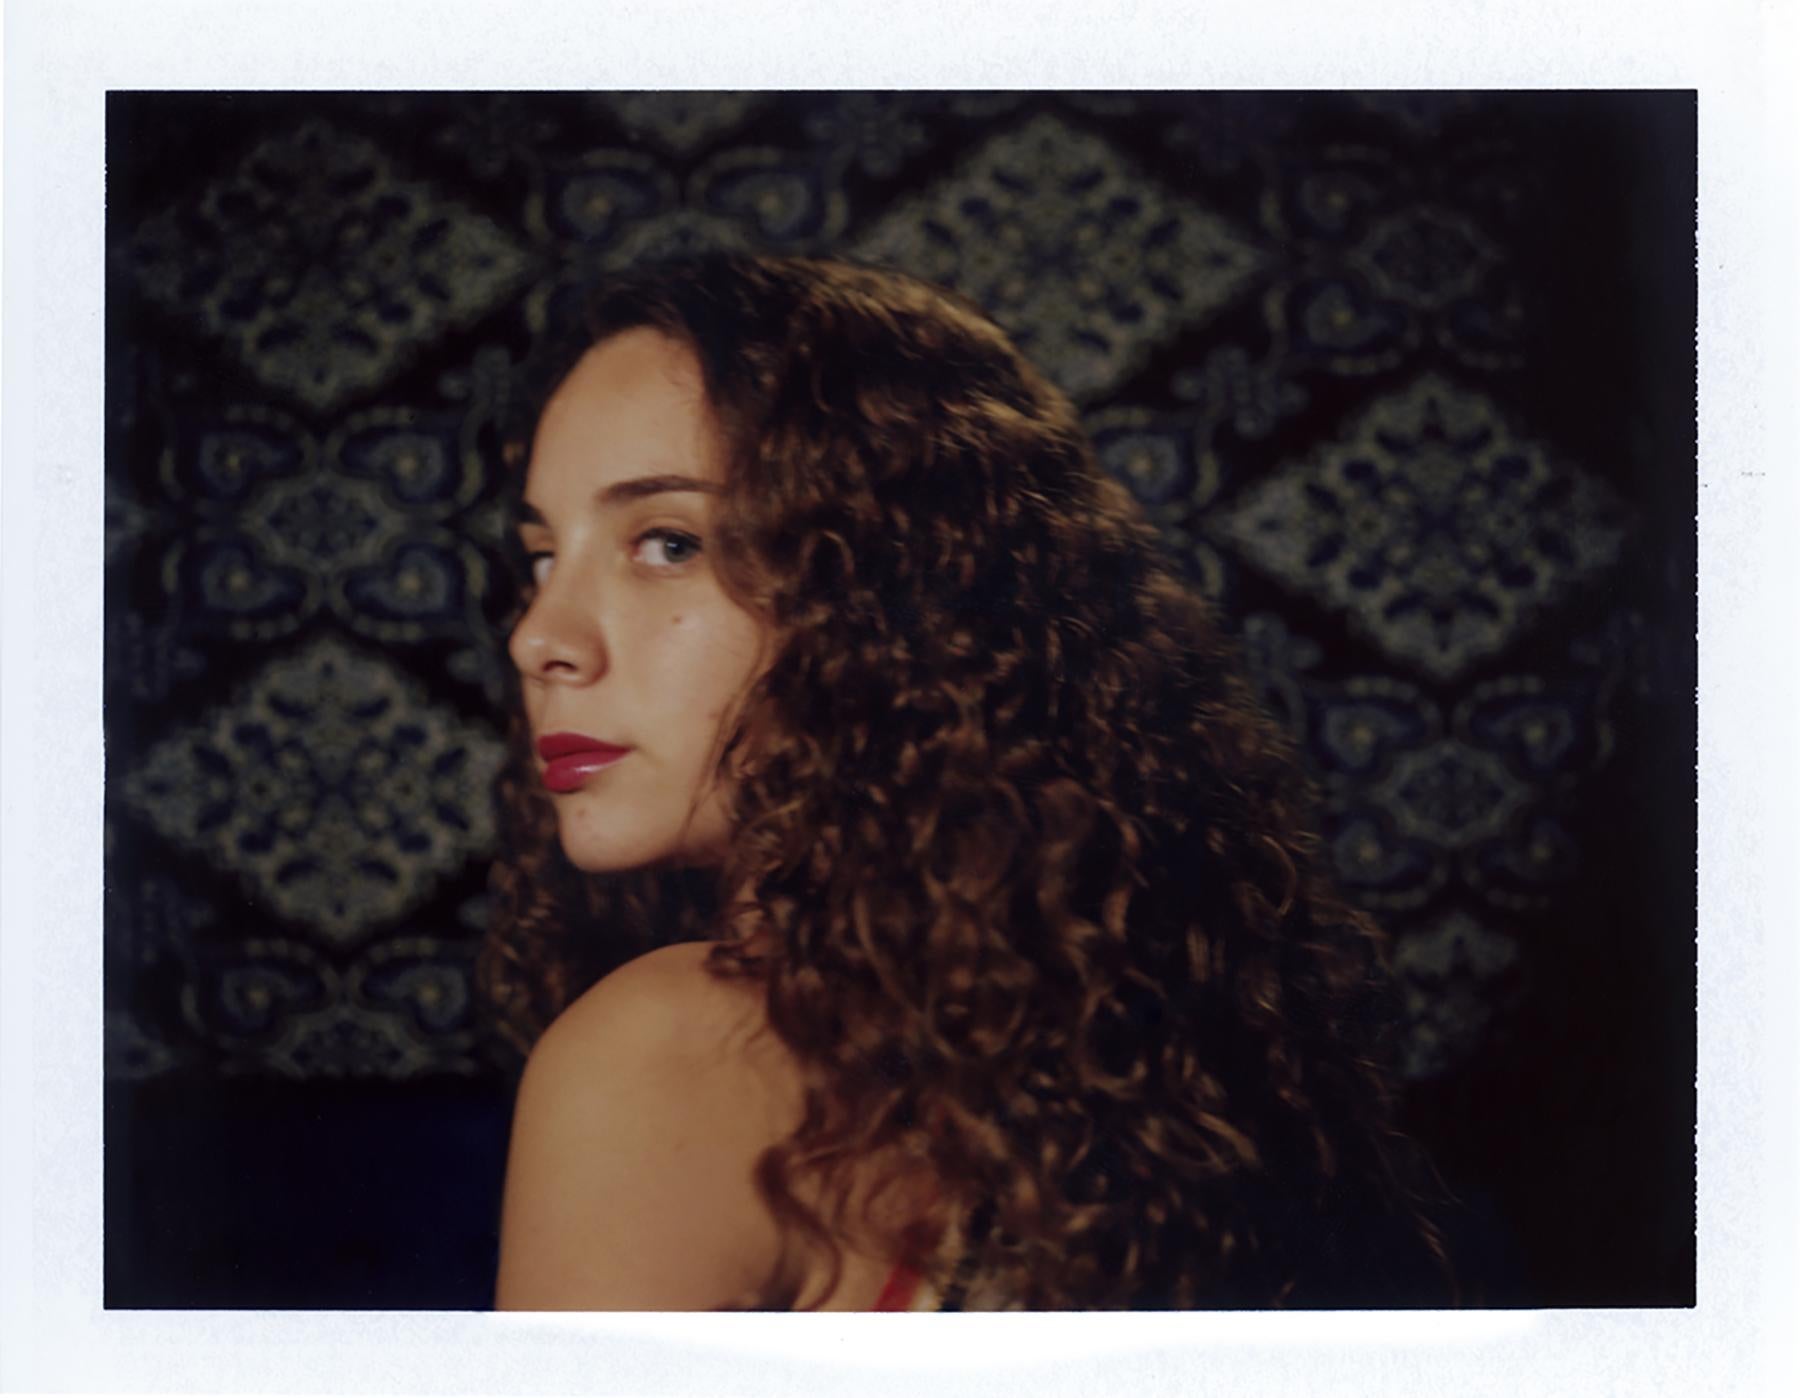 Cristina Fontsare Color Photograph - Eigtheen- Contemporary, Polaroid, Photograph, Youth, 21st Century